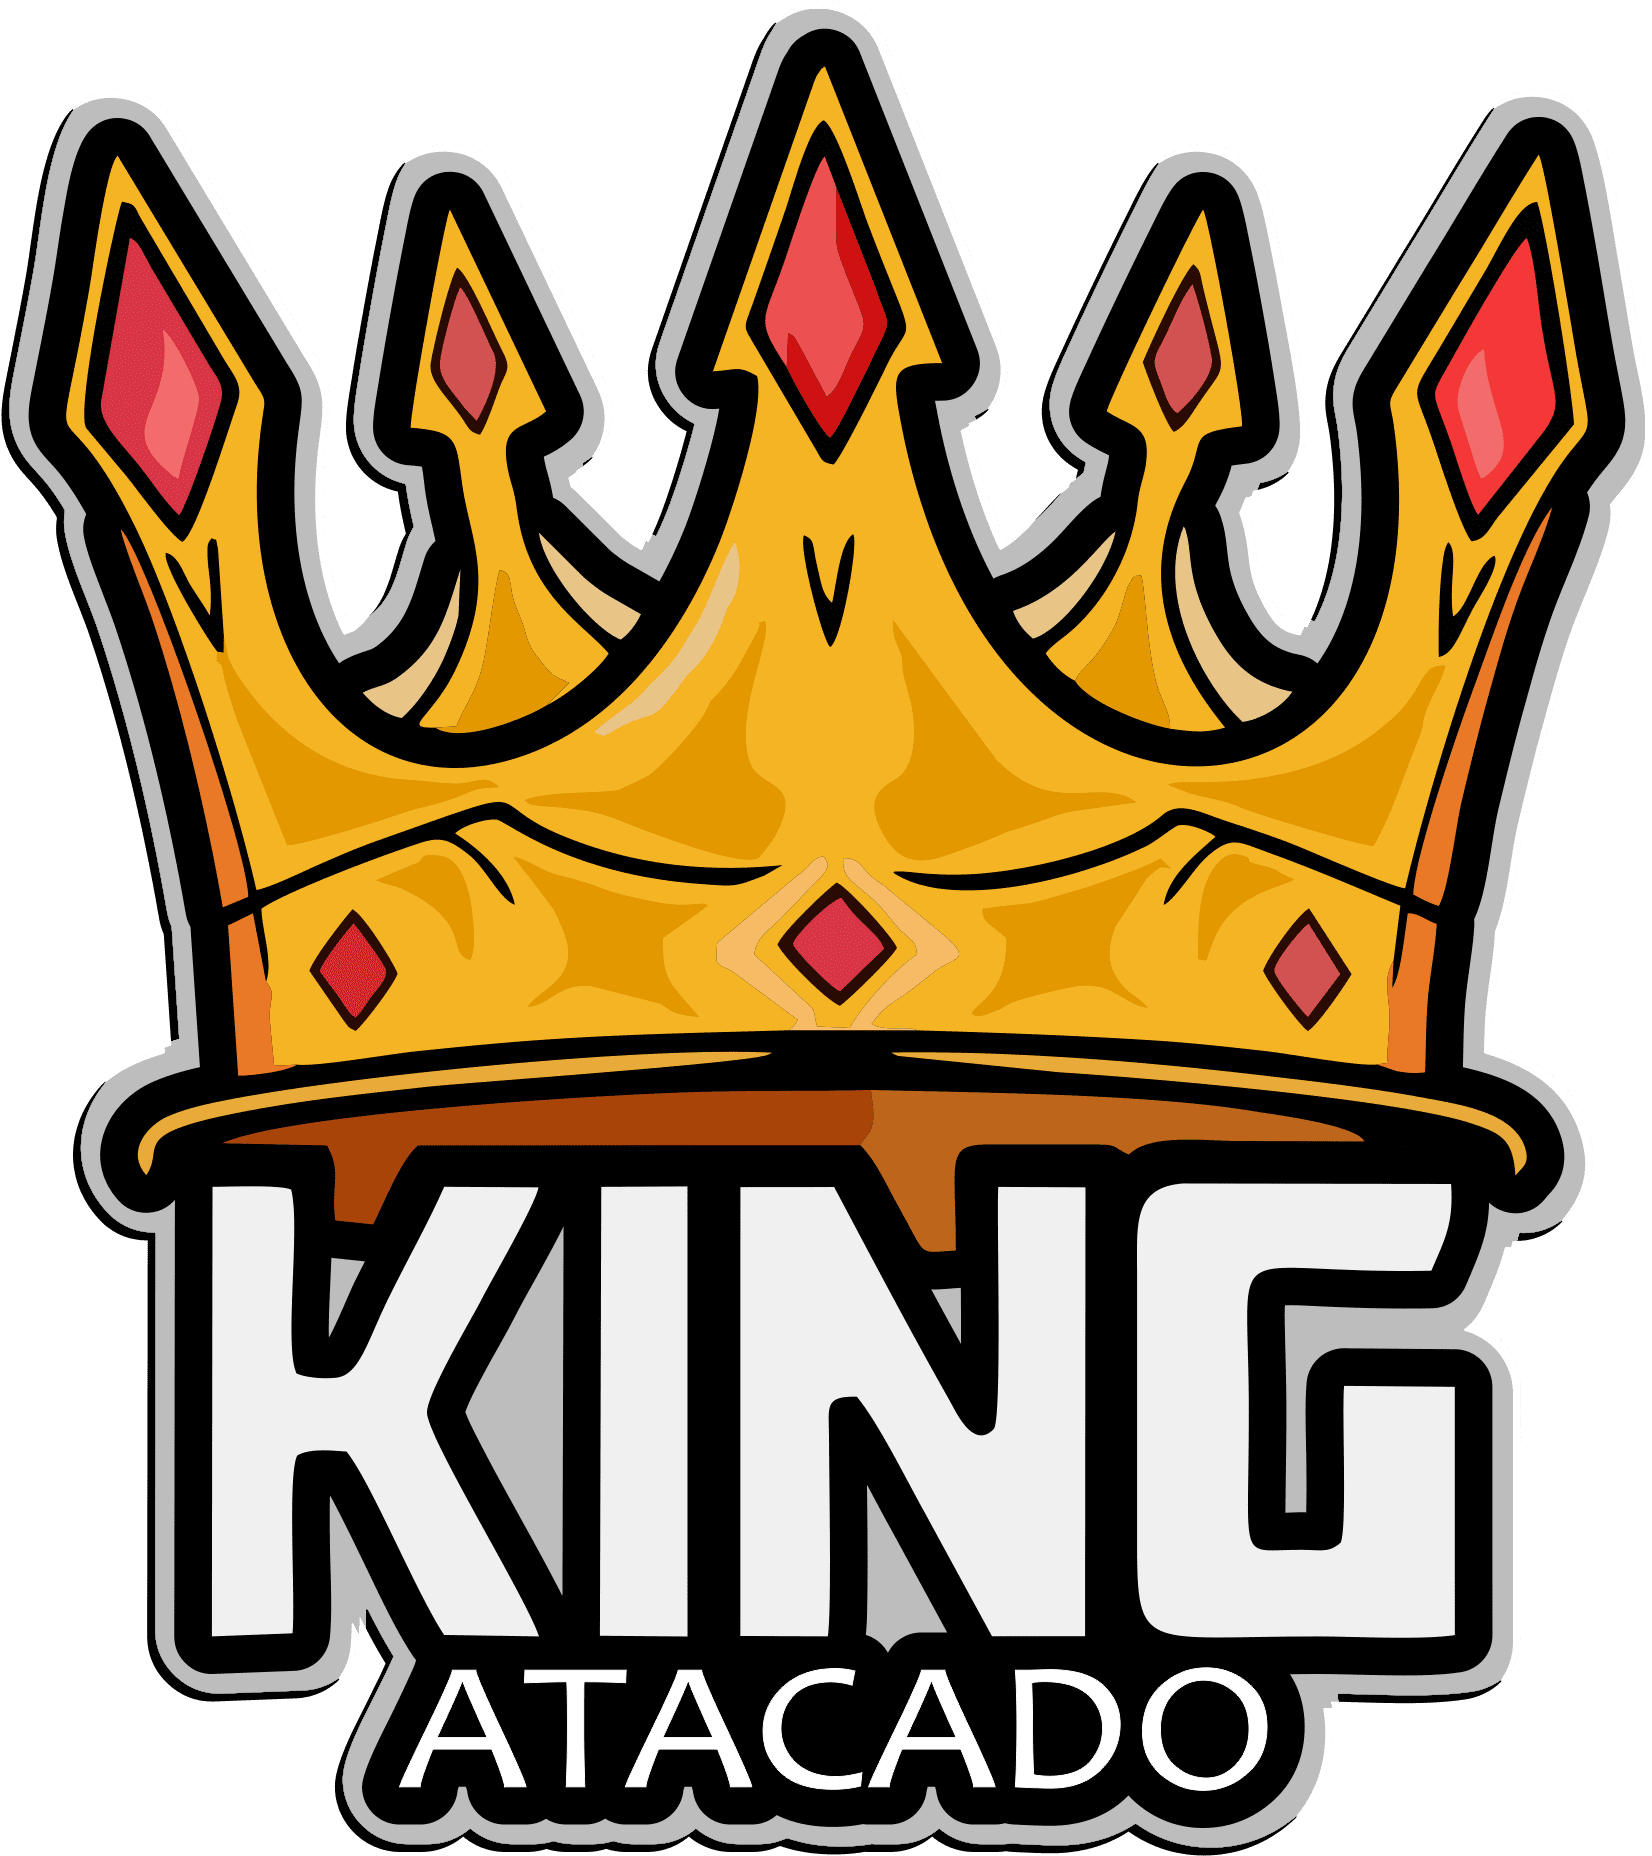 BOTAS CATERPILLAR ATACADO - Fornecedor De Tenis: King Atacado -  Distribuidora De Calçados